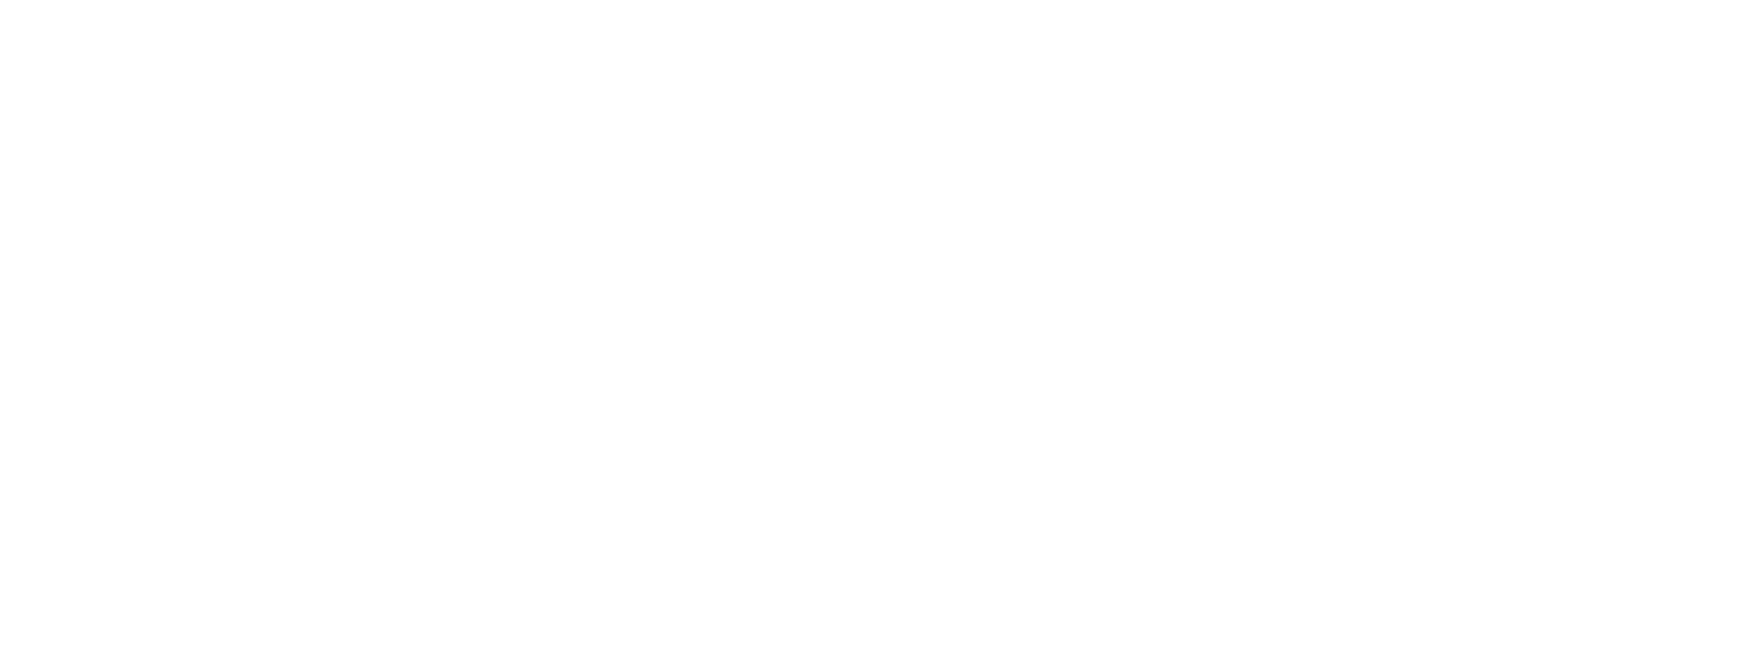 E campaña di conscientisacion  Save the Reef  a nace door di Dorian su stimacion pa Boneiro